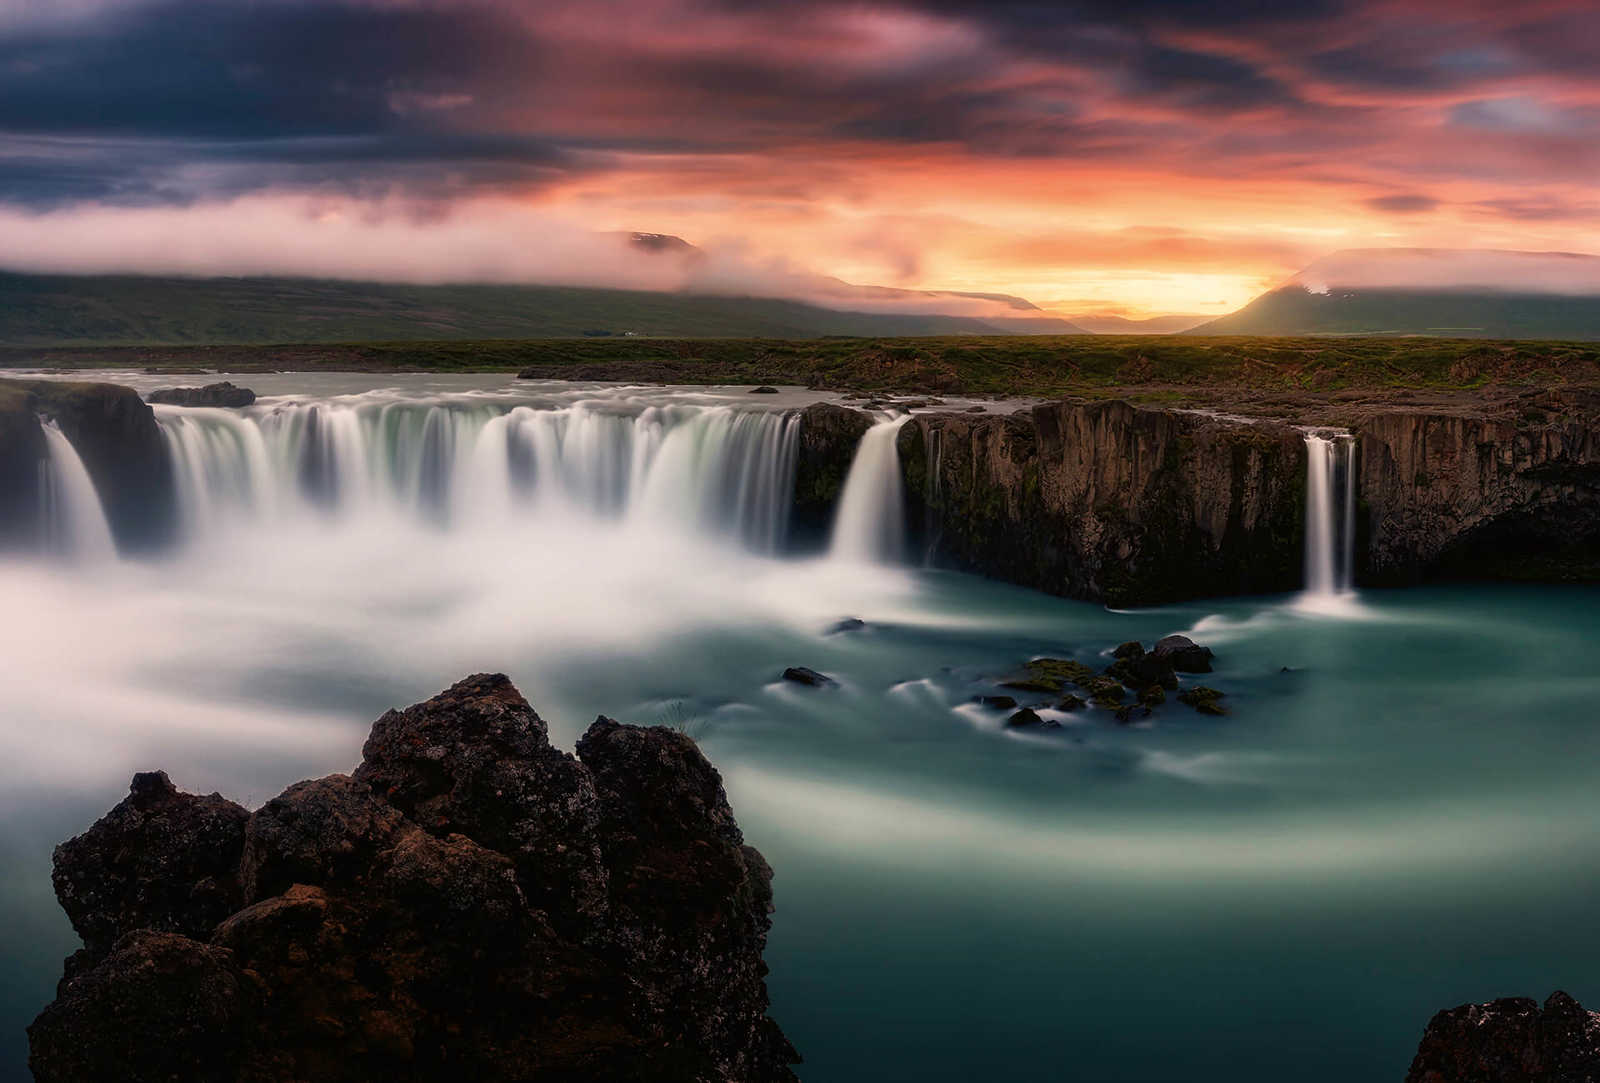         Fototapete Natur mit Wasserfall – Blau, Orange, Weiß
    